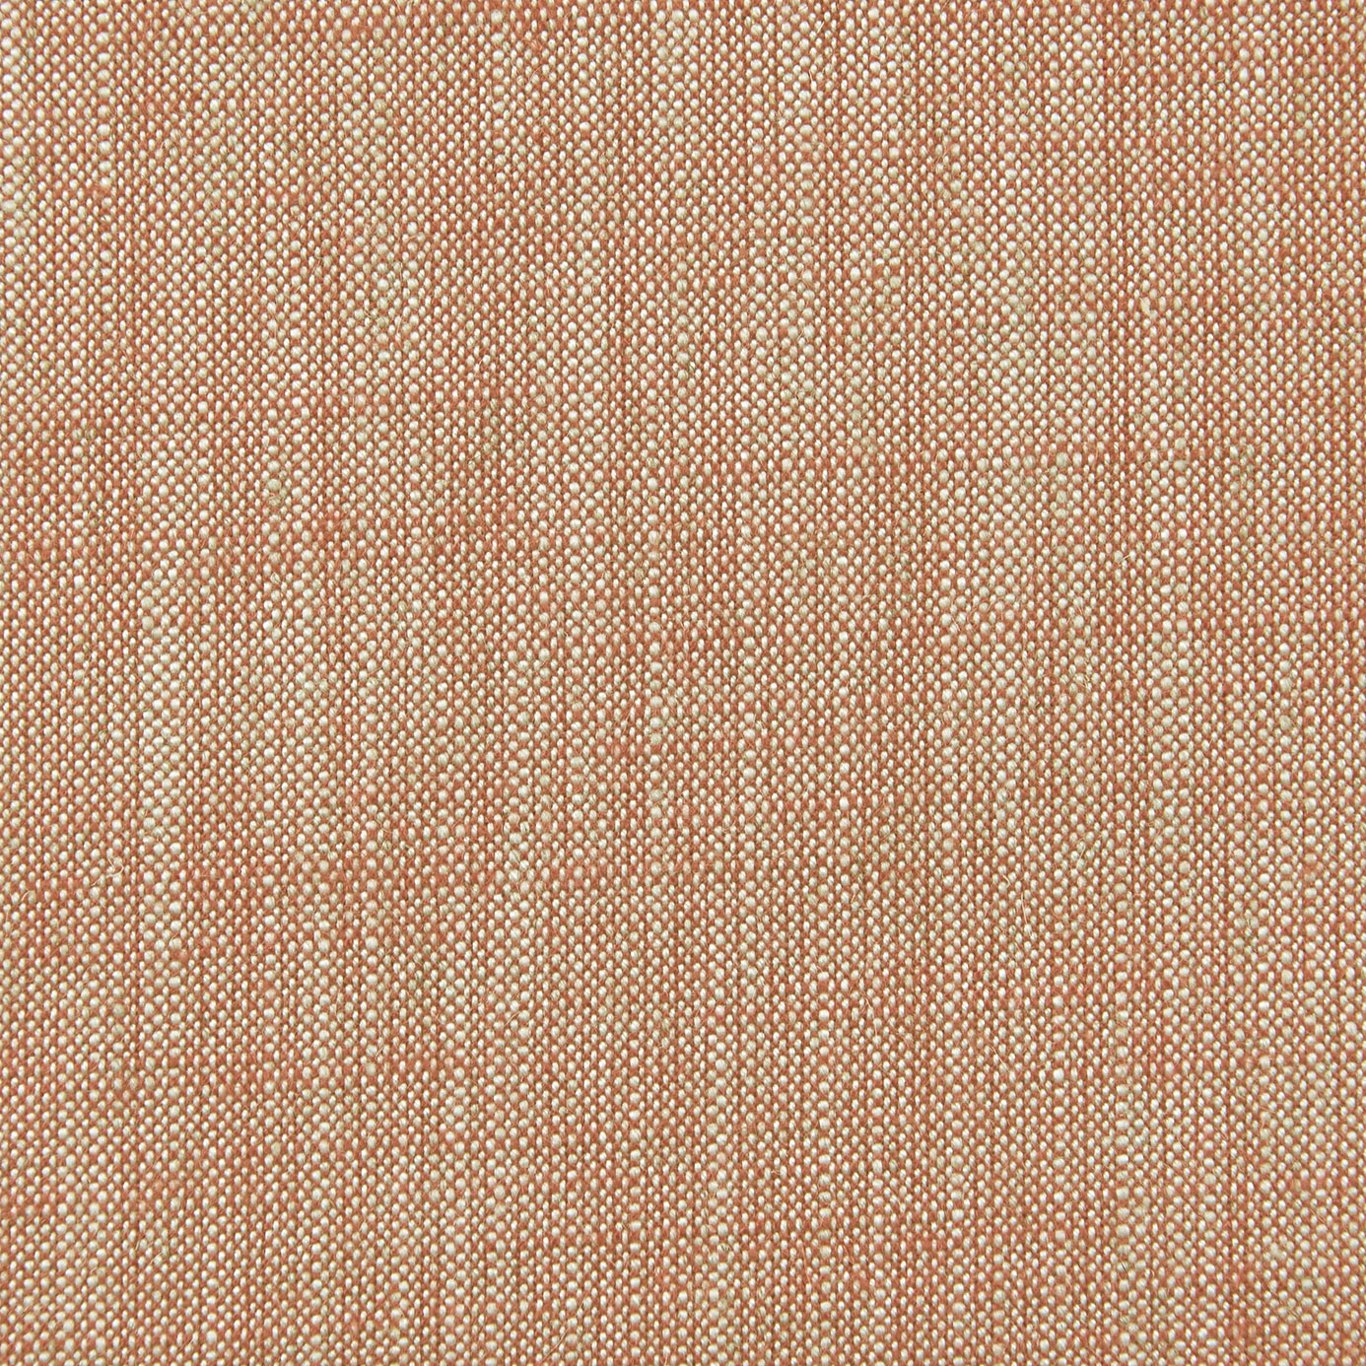 Biarritz Cinnamon Fabric by CNC